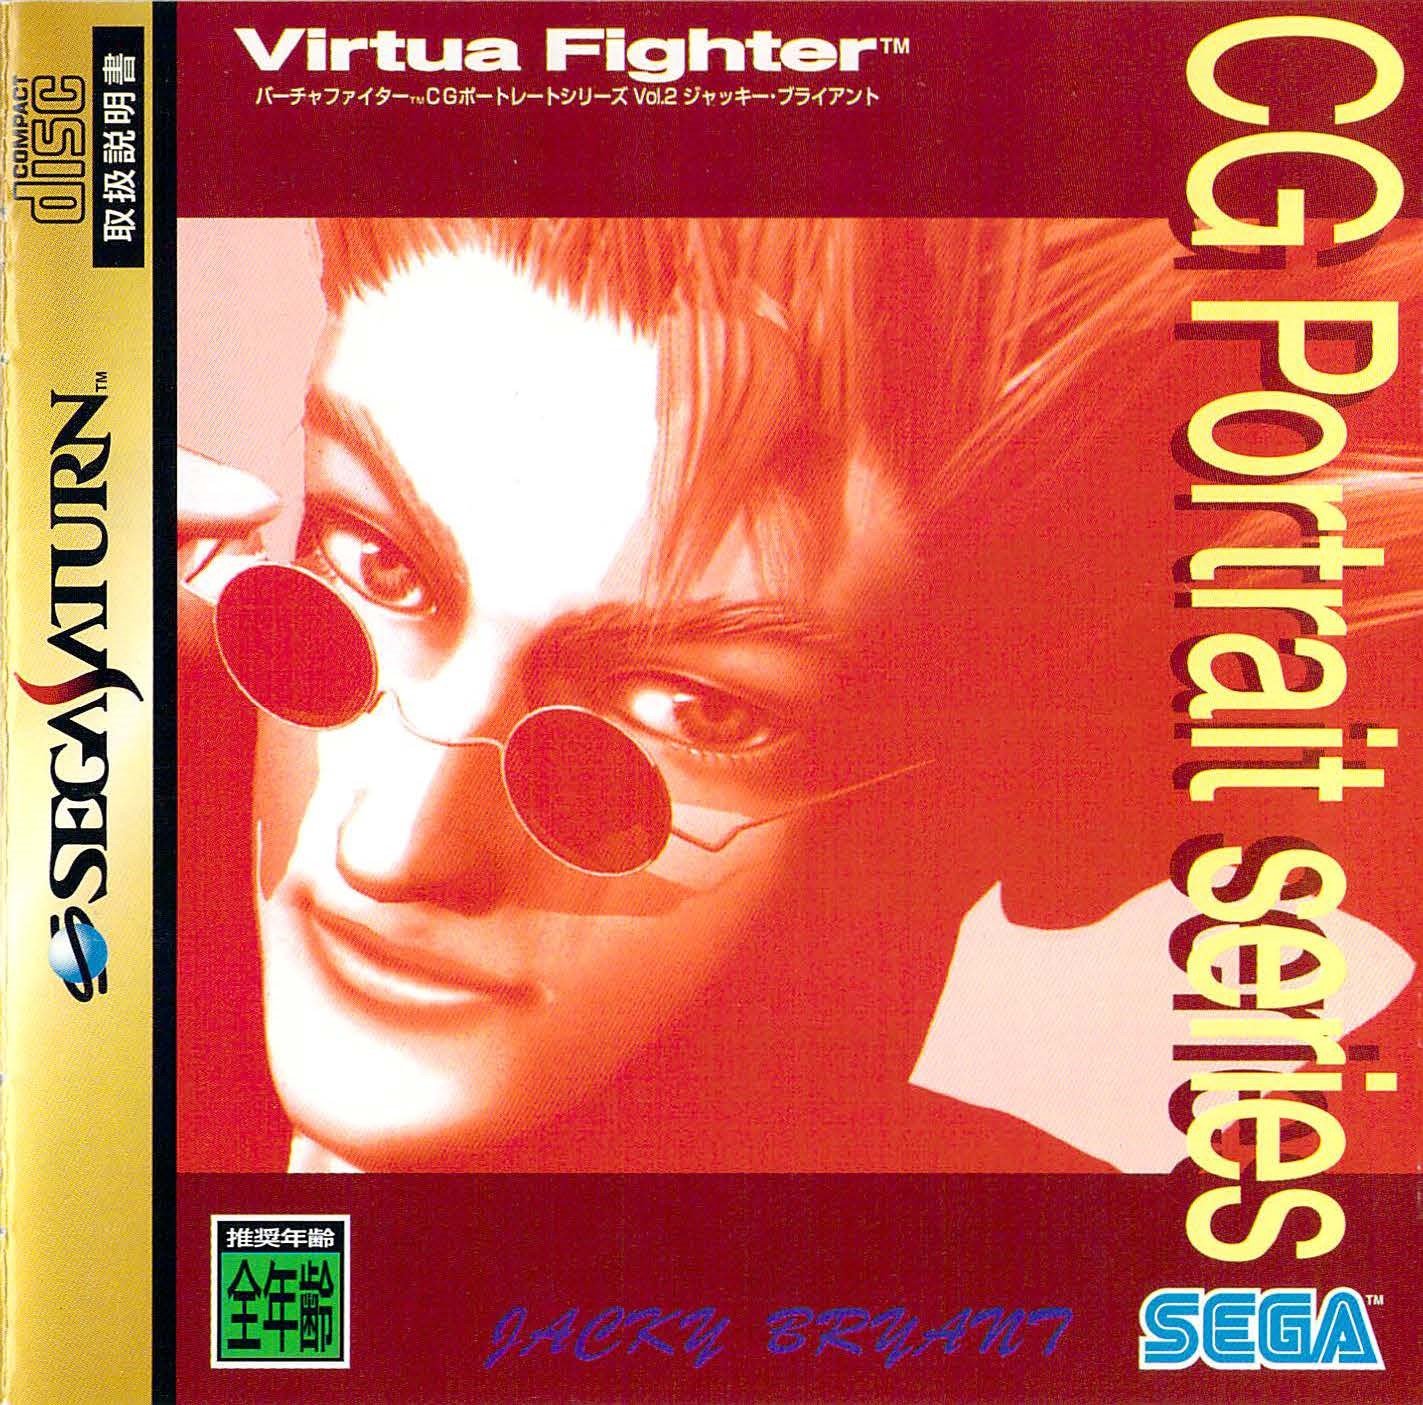 Virtua Fighter CG Portrait Series Vol. 2: Jacky Bryant